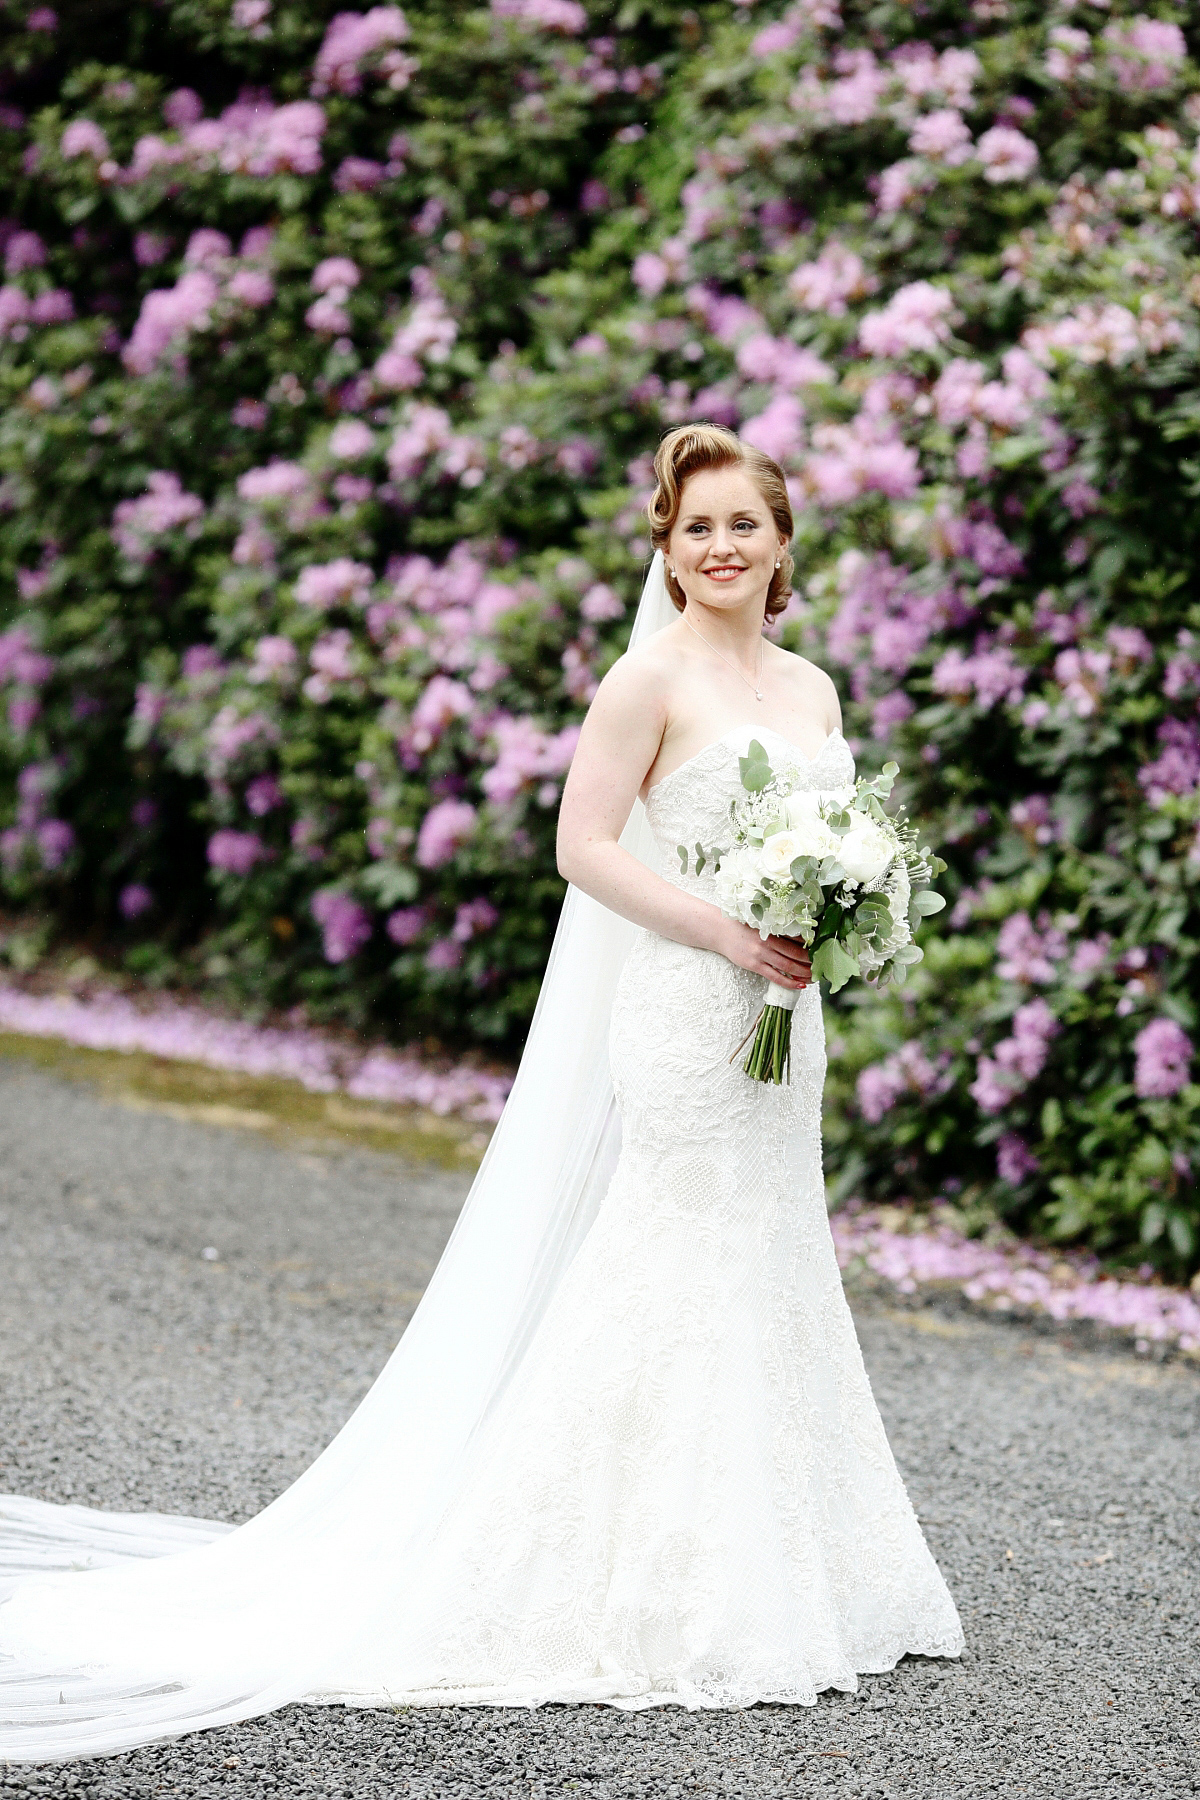 watters dress walled garden wedding scotland dasha caffrey photography 61 1